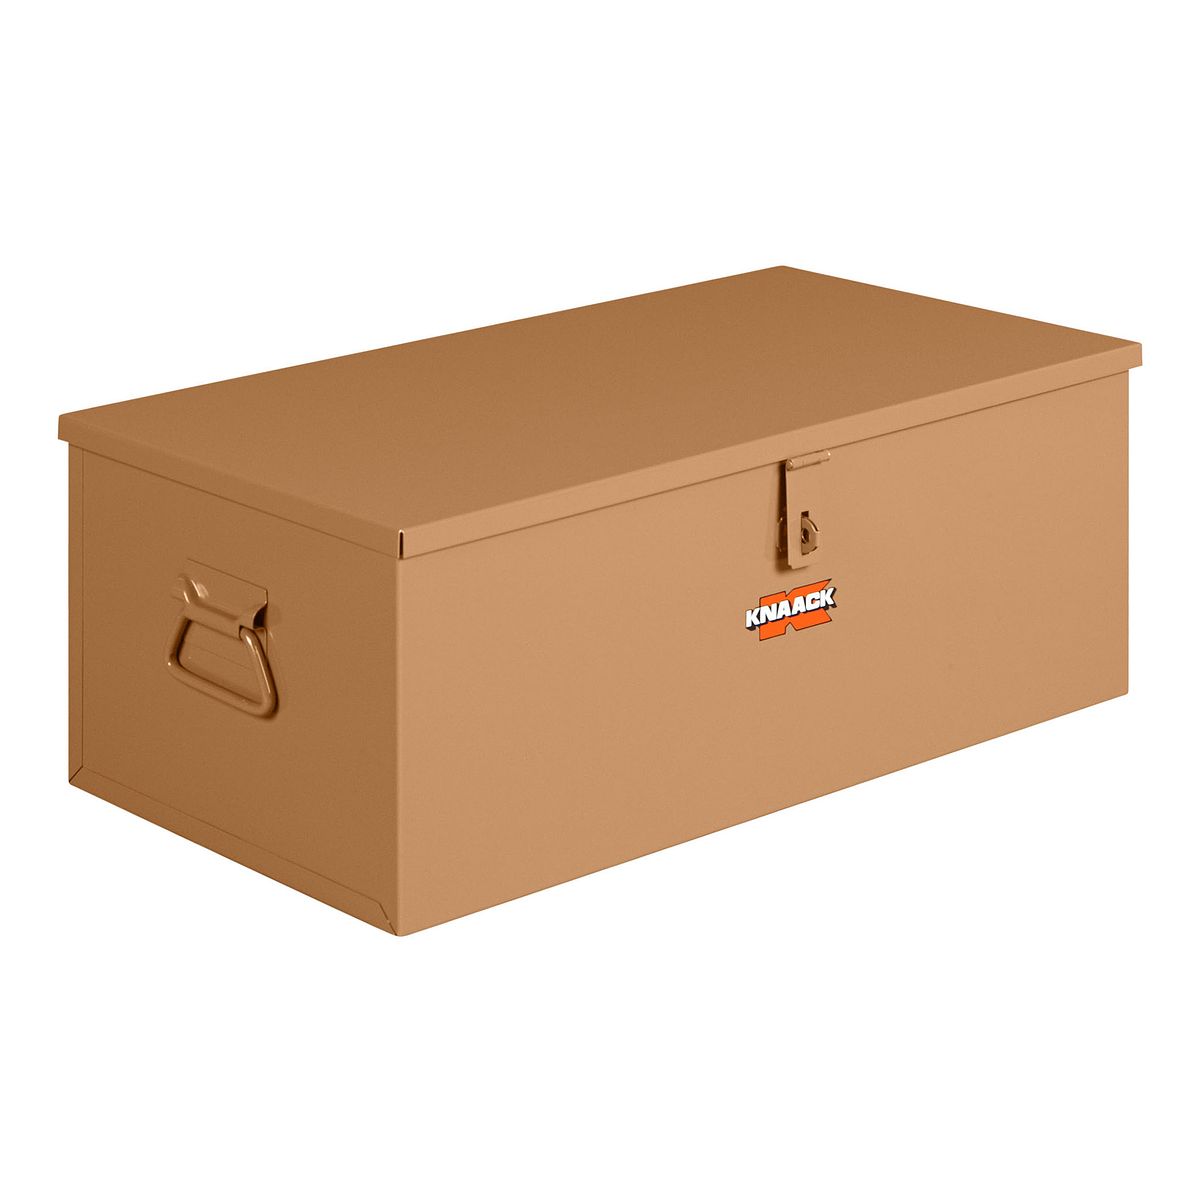 JobSite Toolbox, Equipment Storage Chest Box